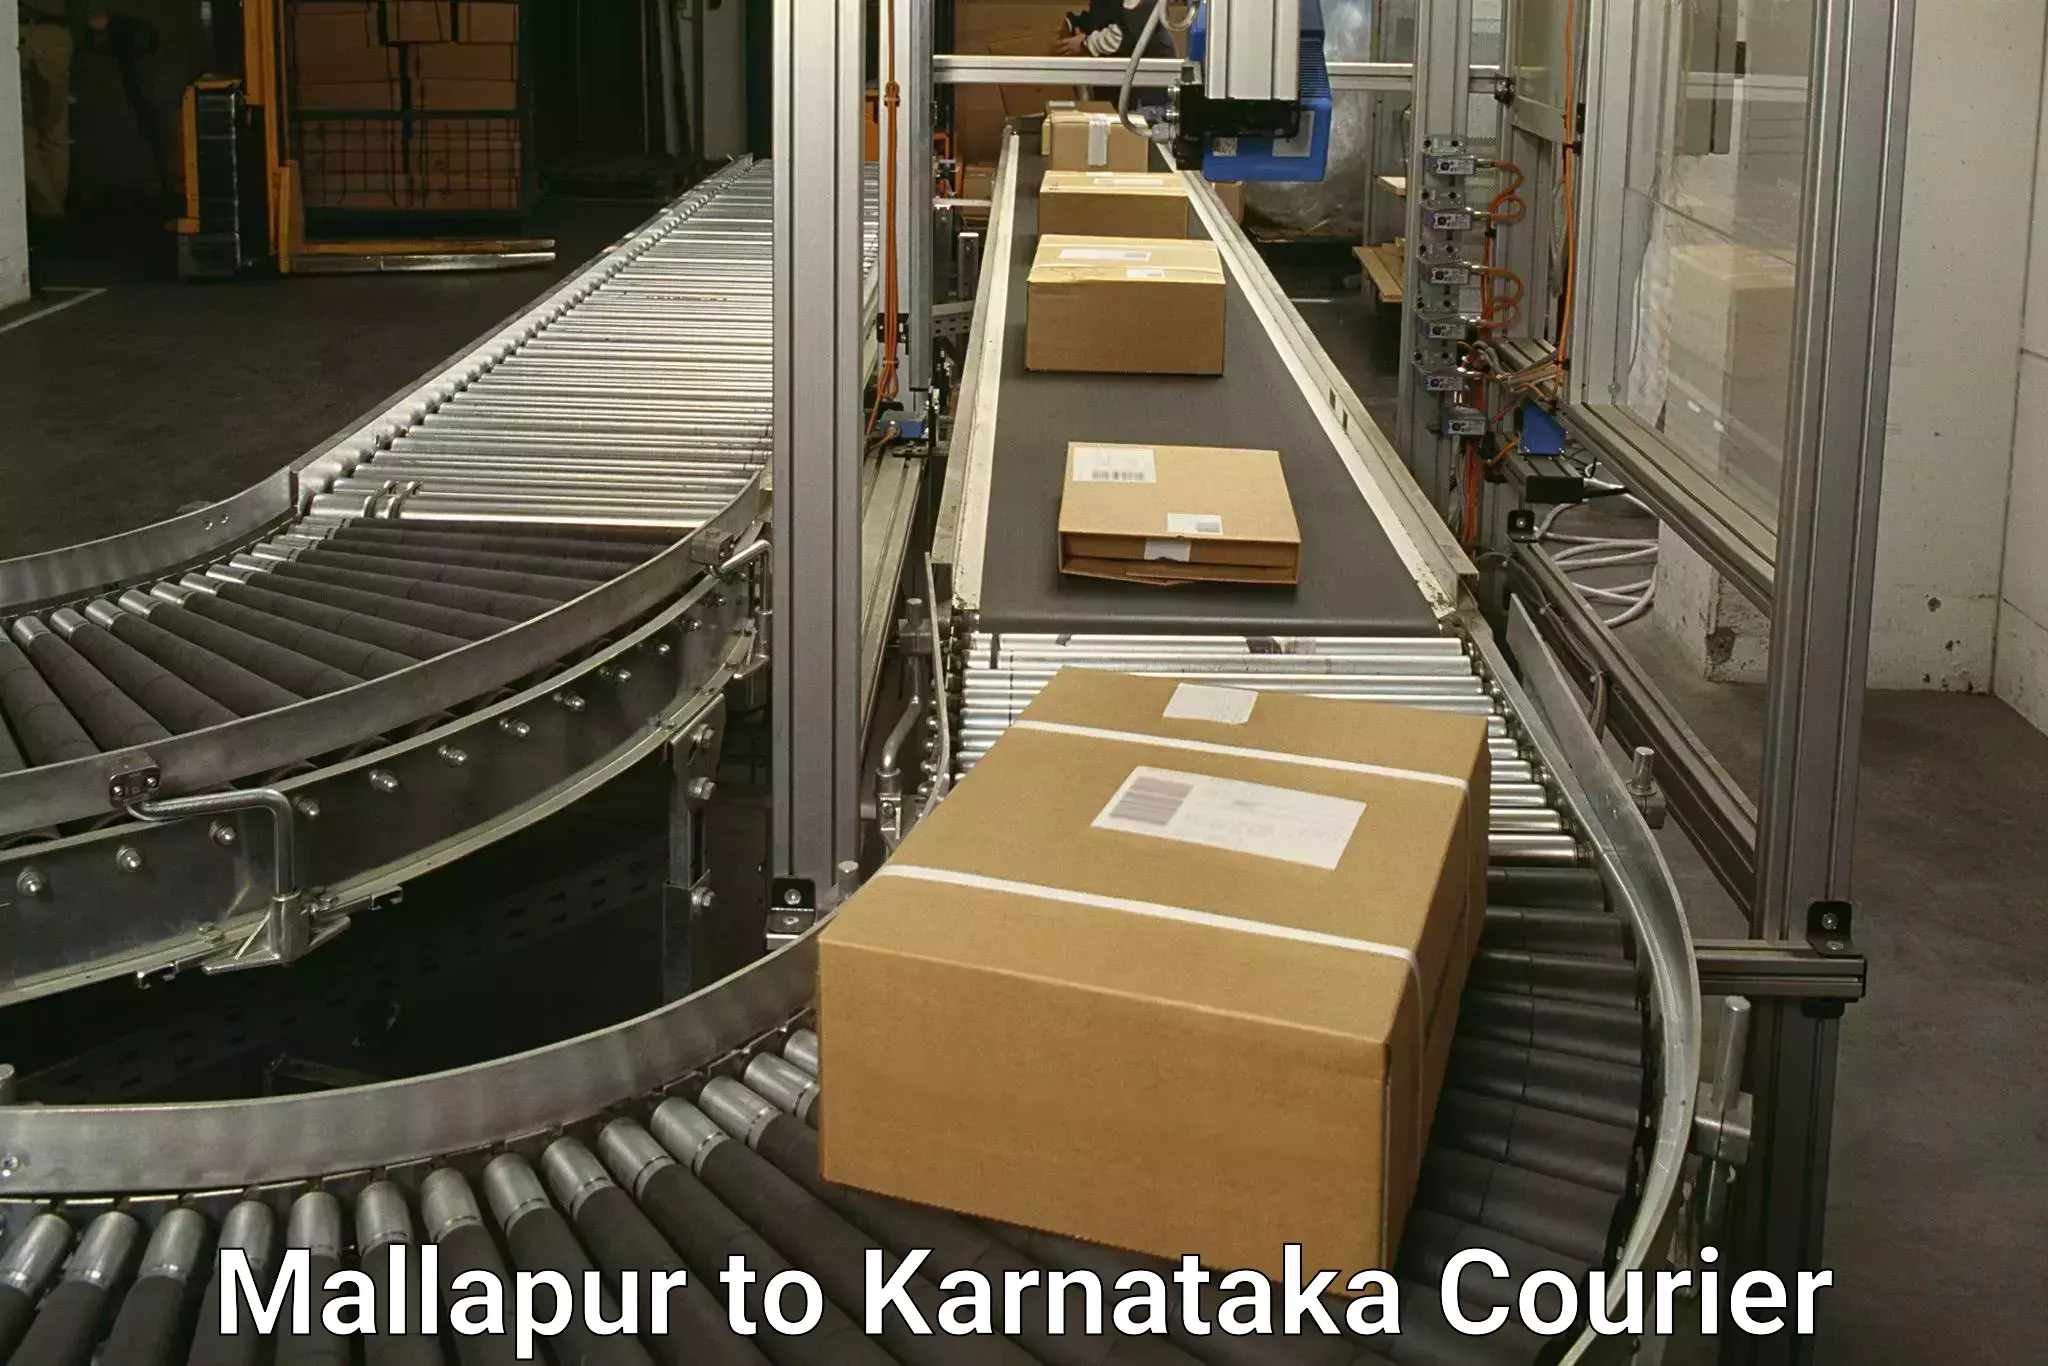 Express delivery capabilities Mallapur to Karnataka